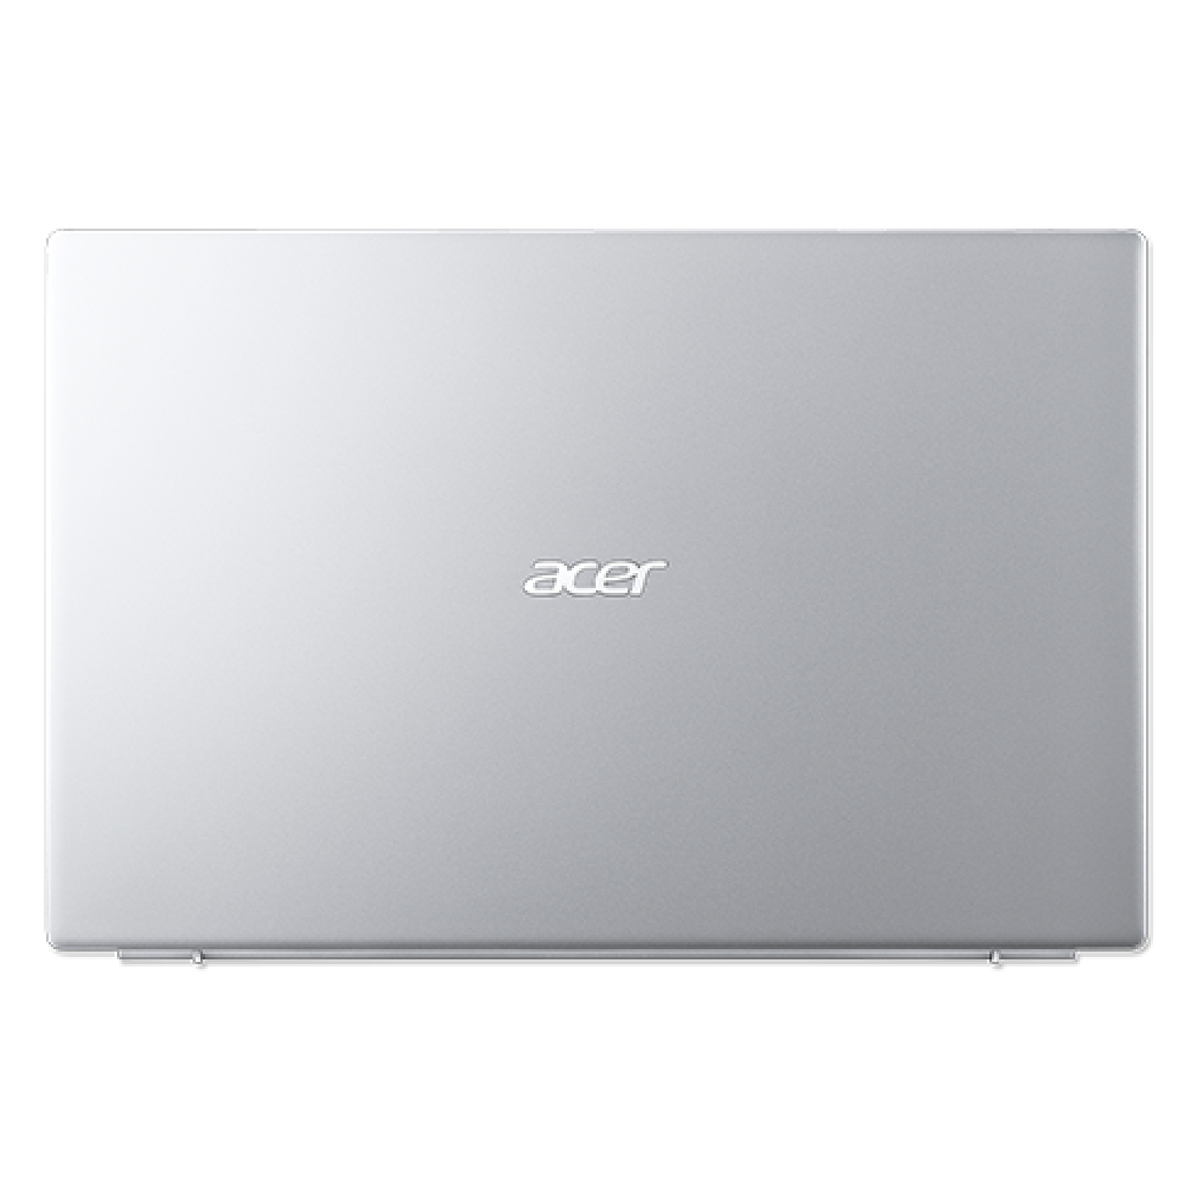 Acer Notebook Swift 1-NXA76EM003,Intel Celeron,4GB RAM,128GB eMMC,Intel UMA Graphics,14.0"FHD,Windows 11,Black,English-Arabic Keyboard